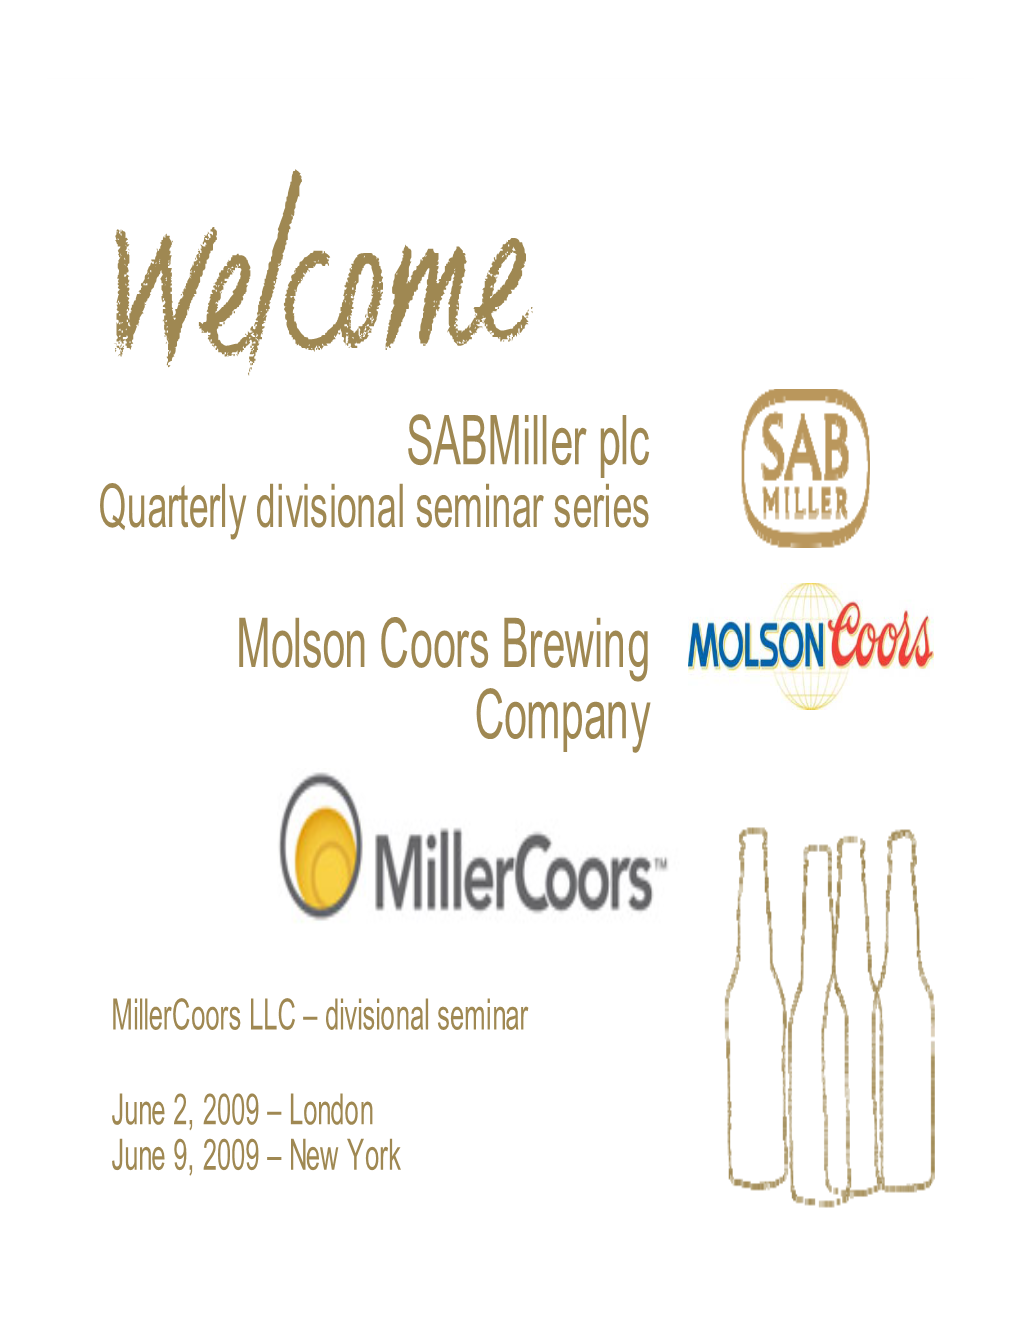 Sabmiller Plc Molson Coors Brewing Company